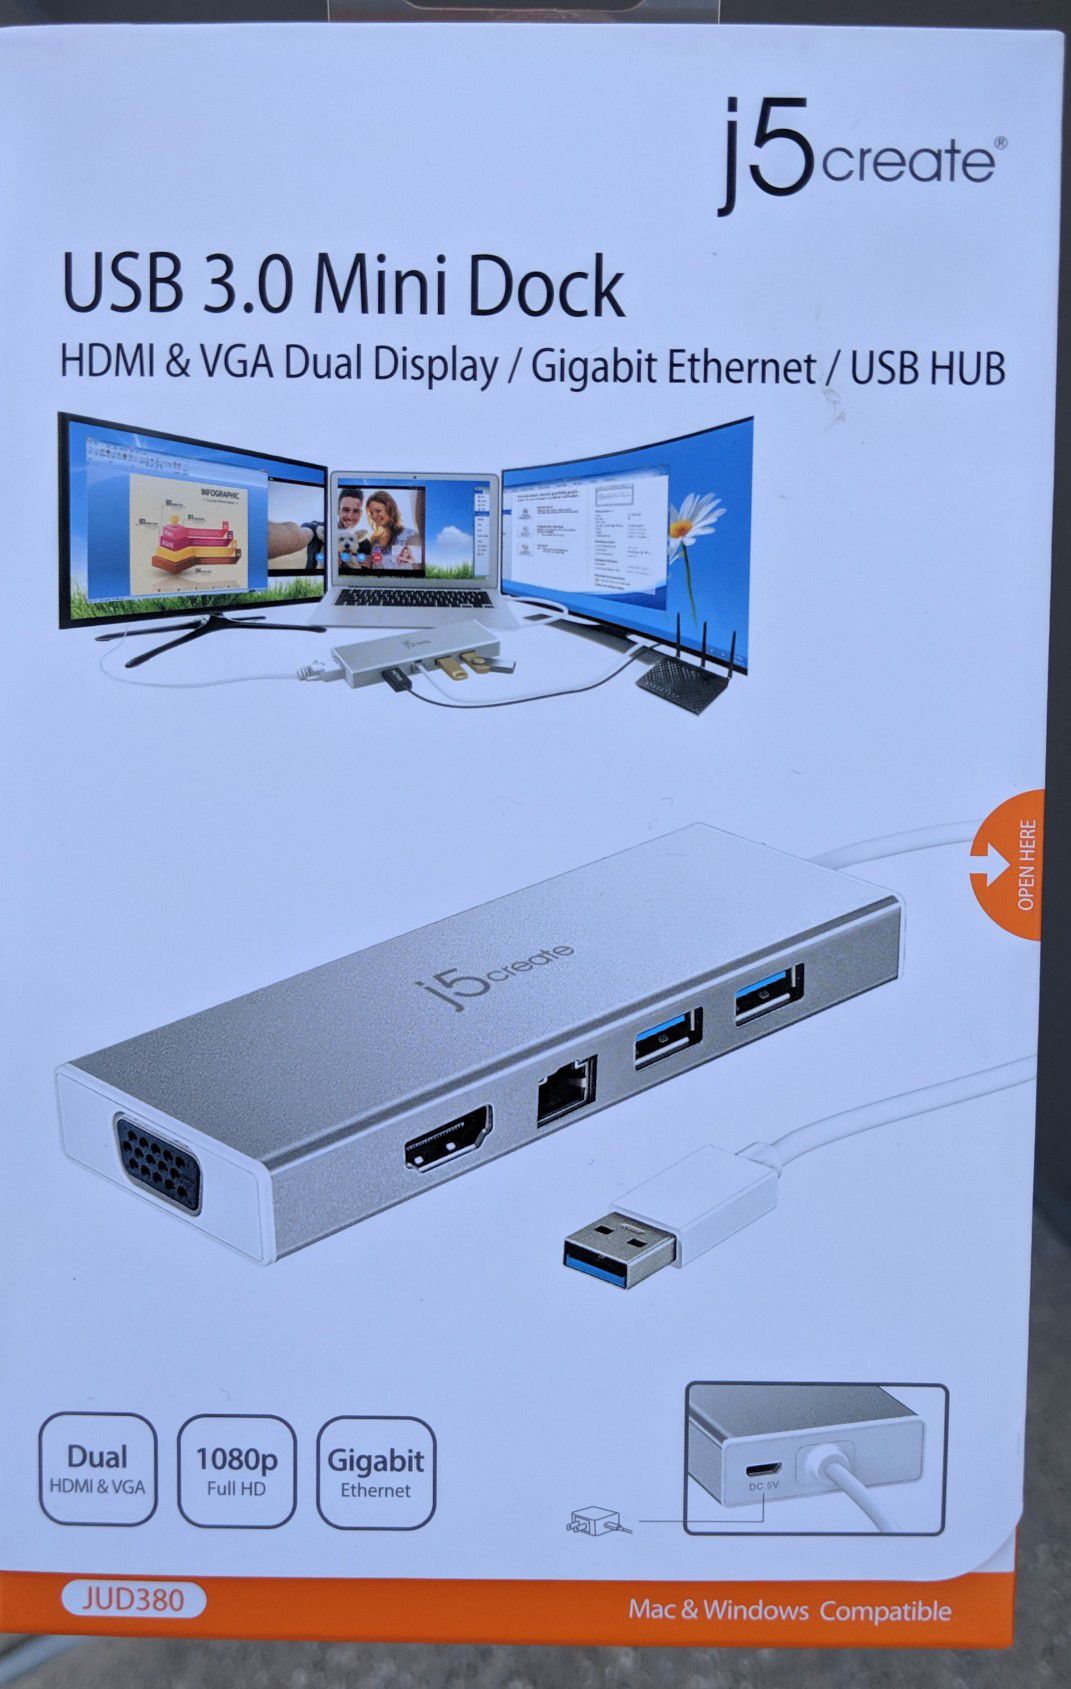 J5create USB 3.0 Mini Dock HDMI & VGA Dual Display / Gigabit Ethernet / USB HUB 15